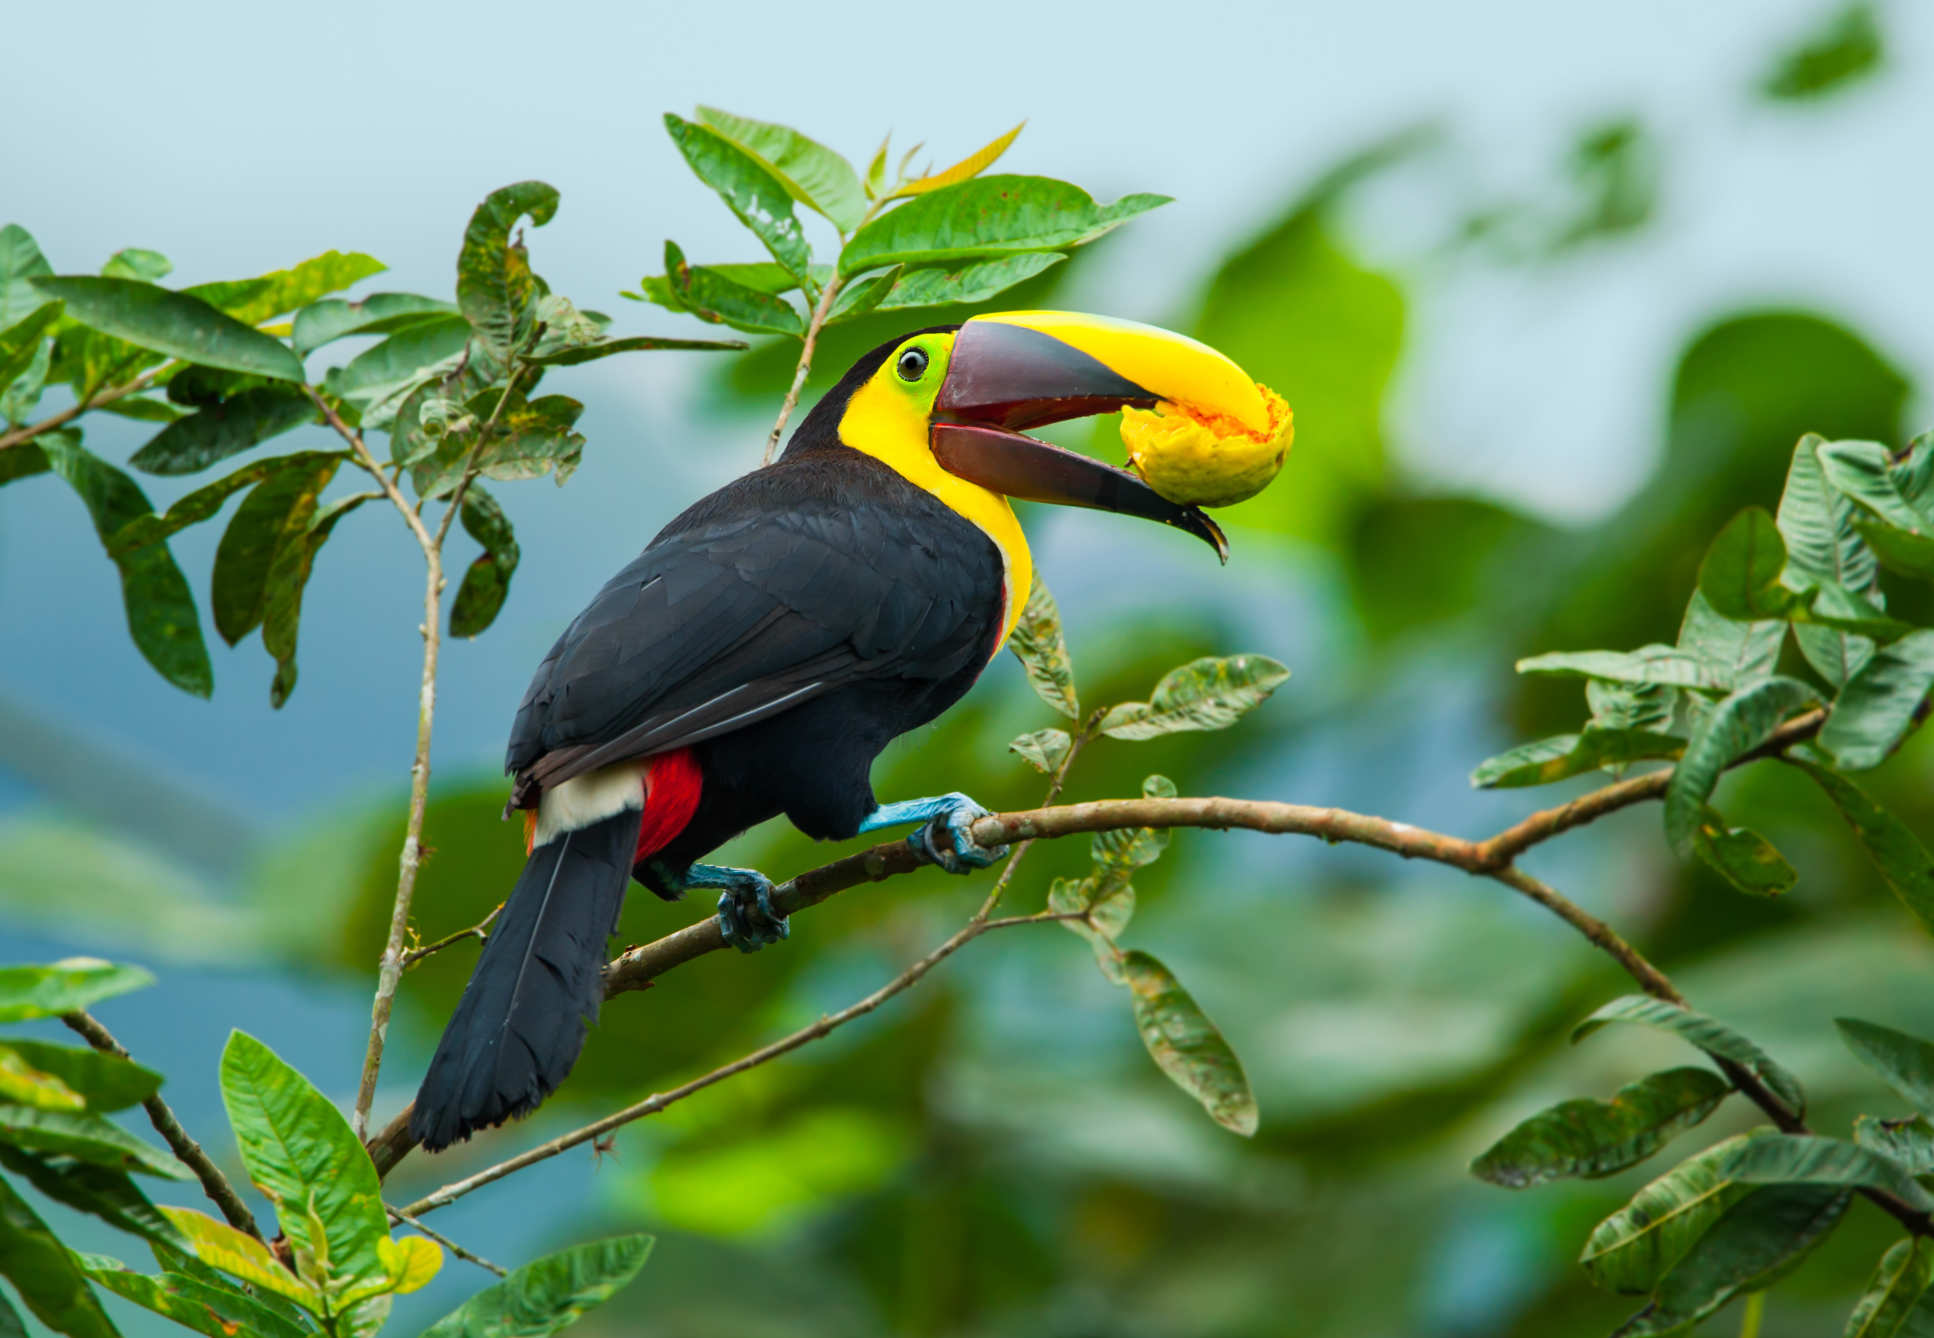 A toucan eating fruit